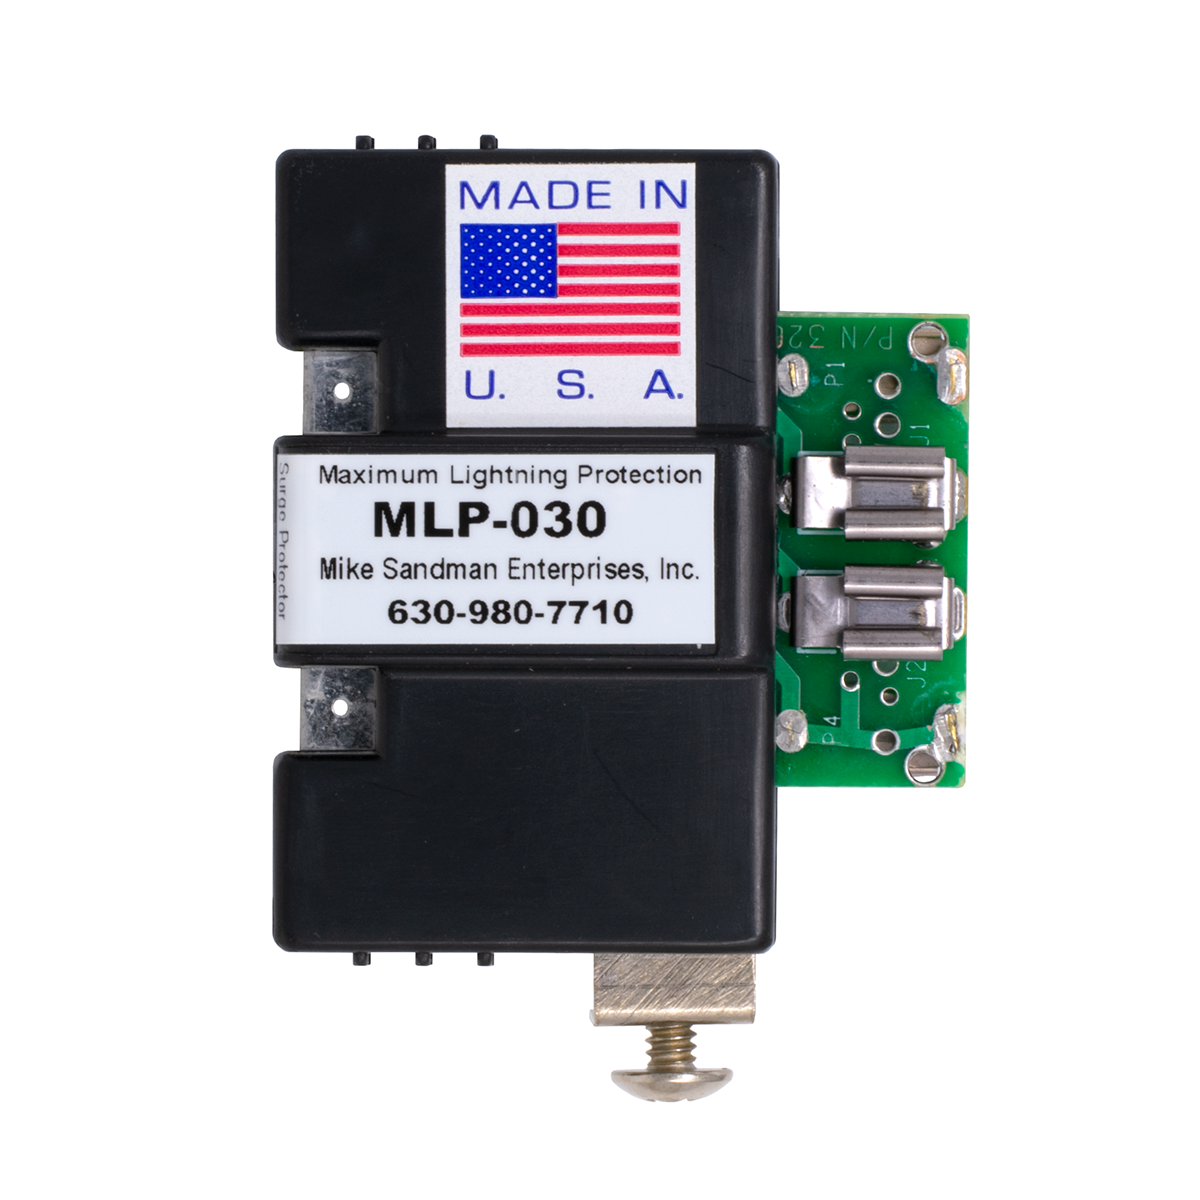 MLP-030 12-24V 1 Pair Data Lightning Protector (Top View)